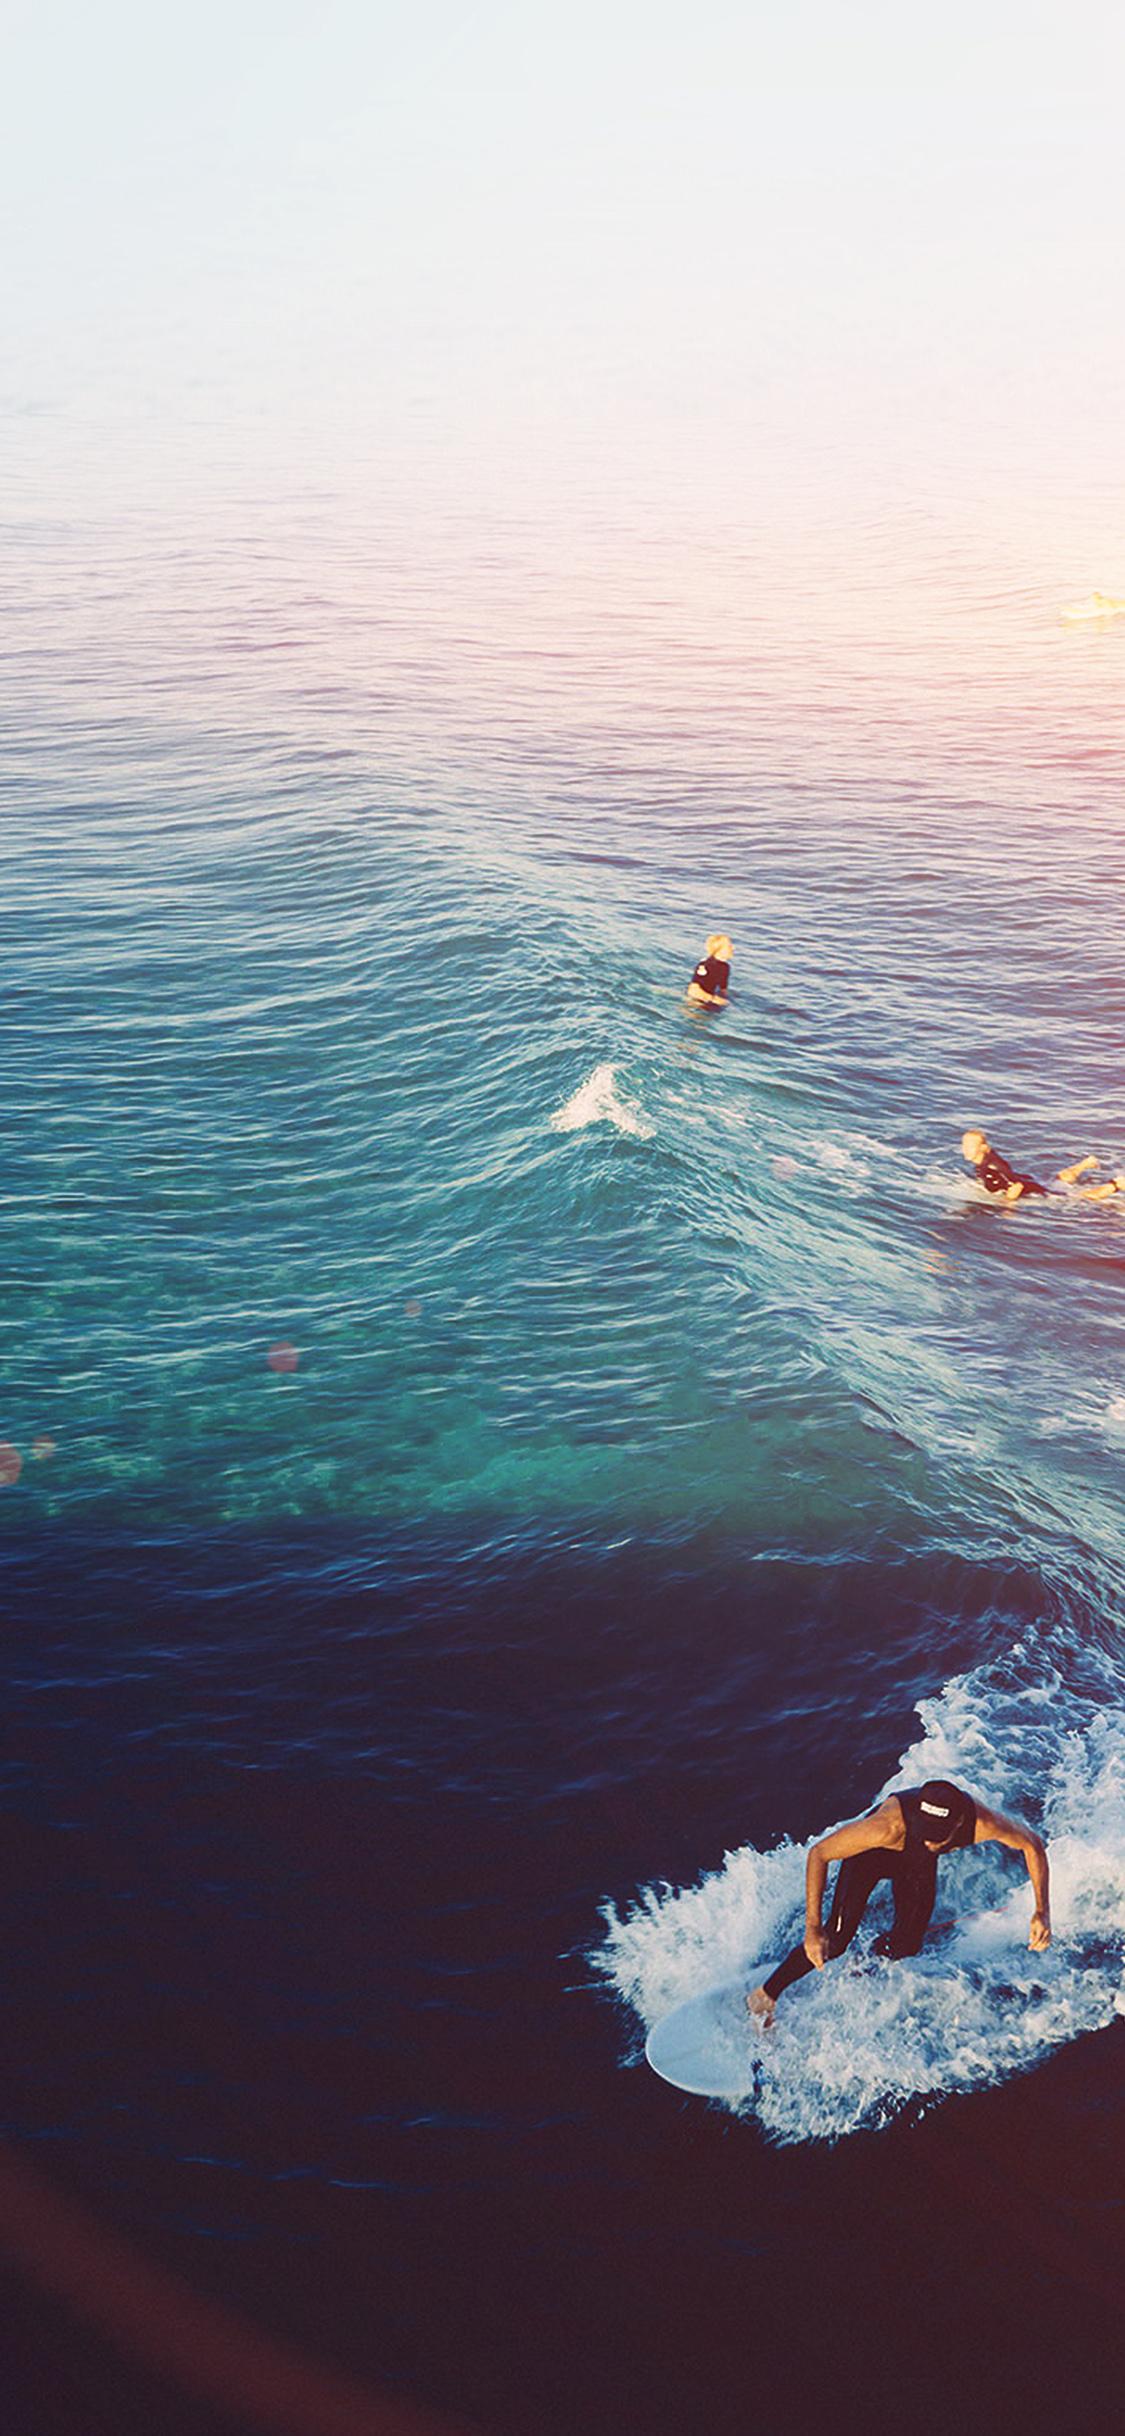 iPhone X wallpaper. surfing wave summer sea ocean flare